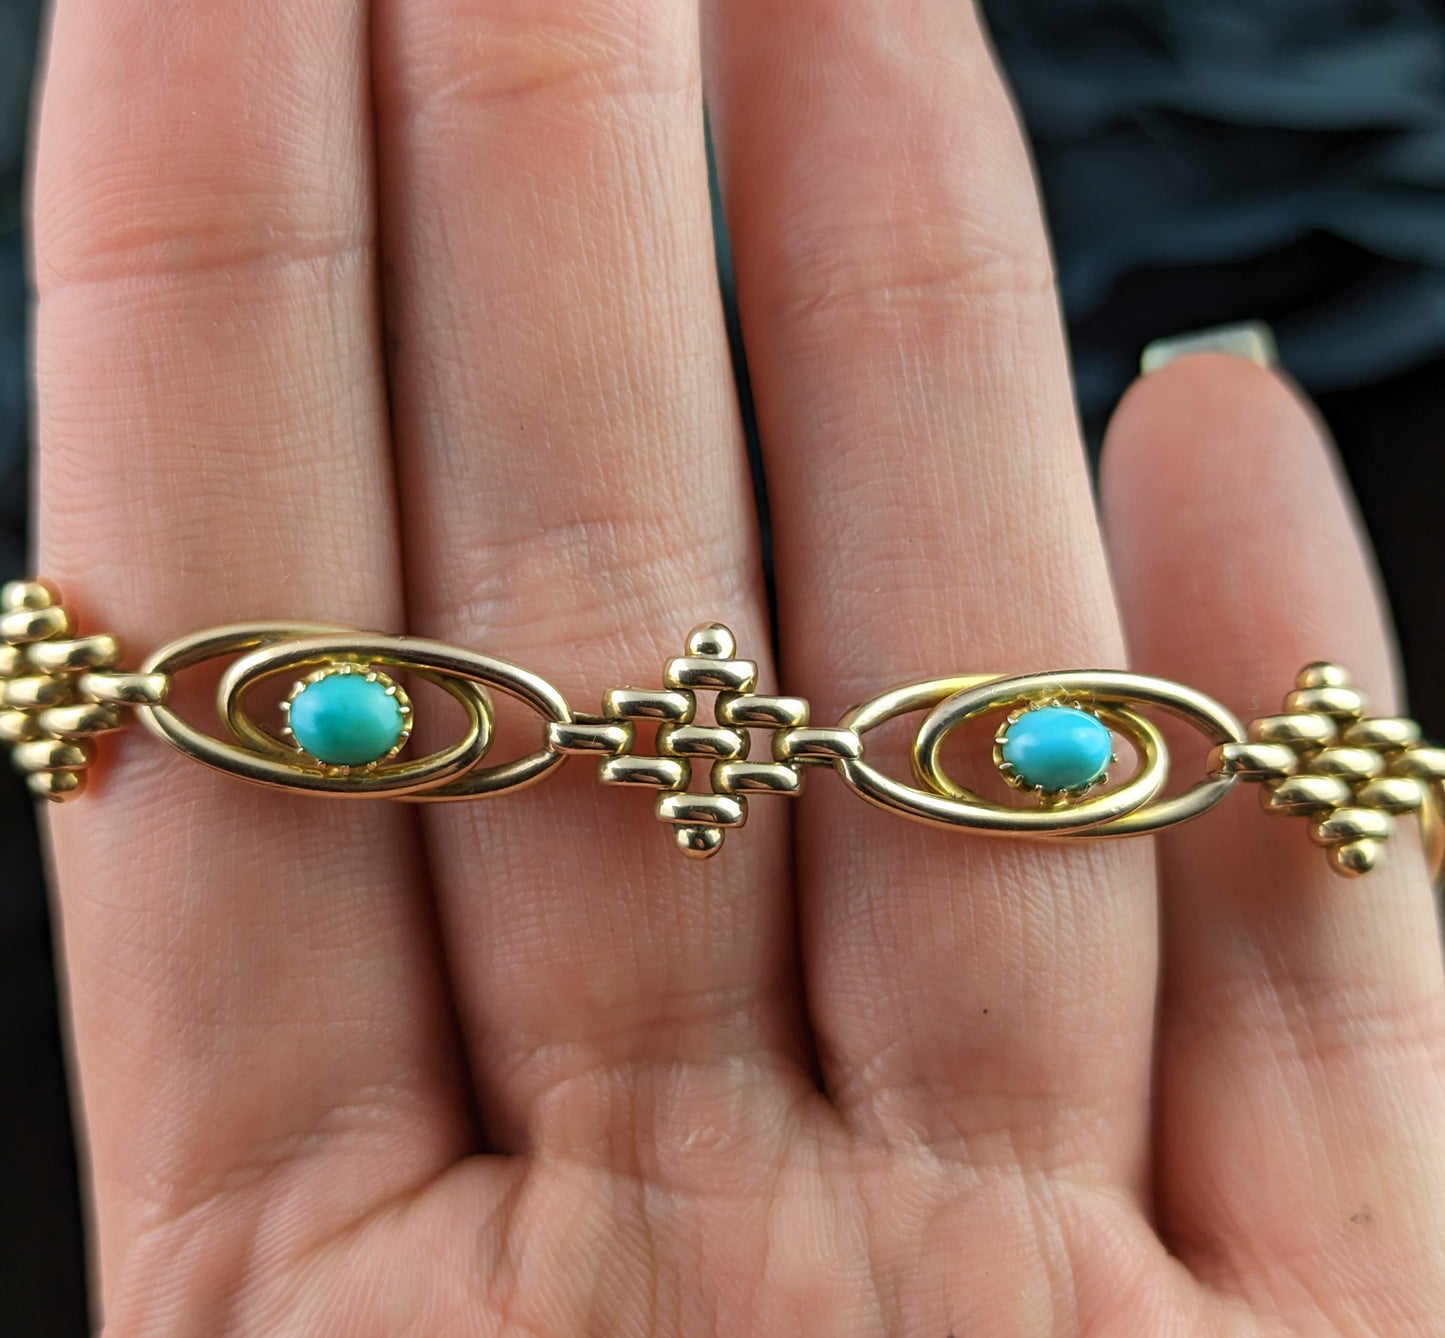 Antique 9ct gold fancy link bracelet, turquoise, Edwardian